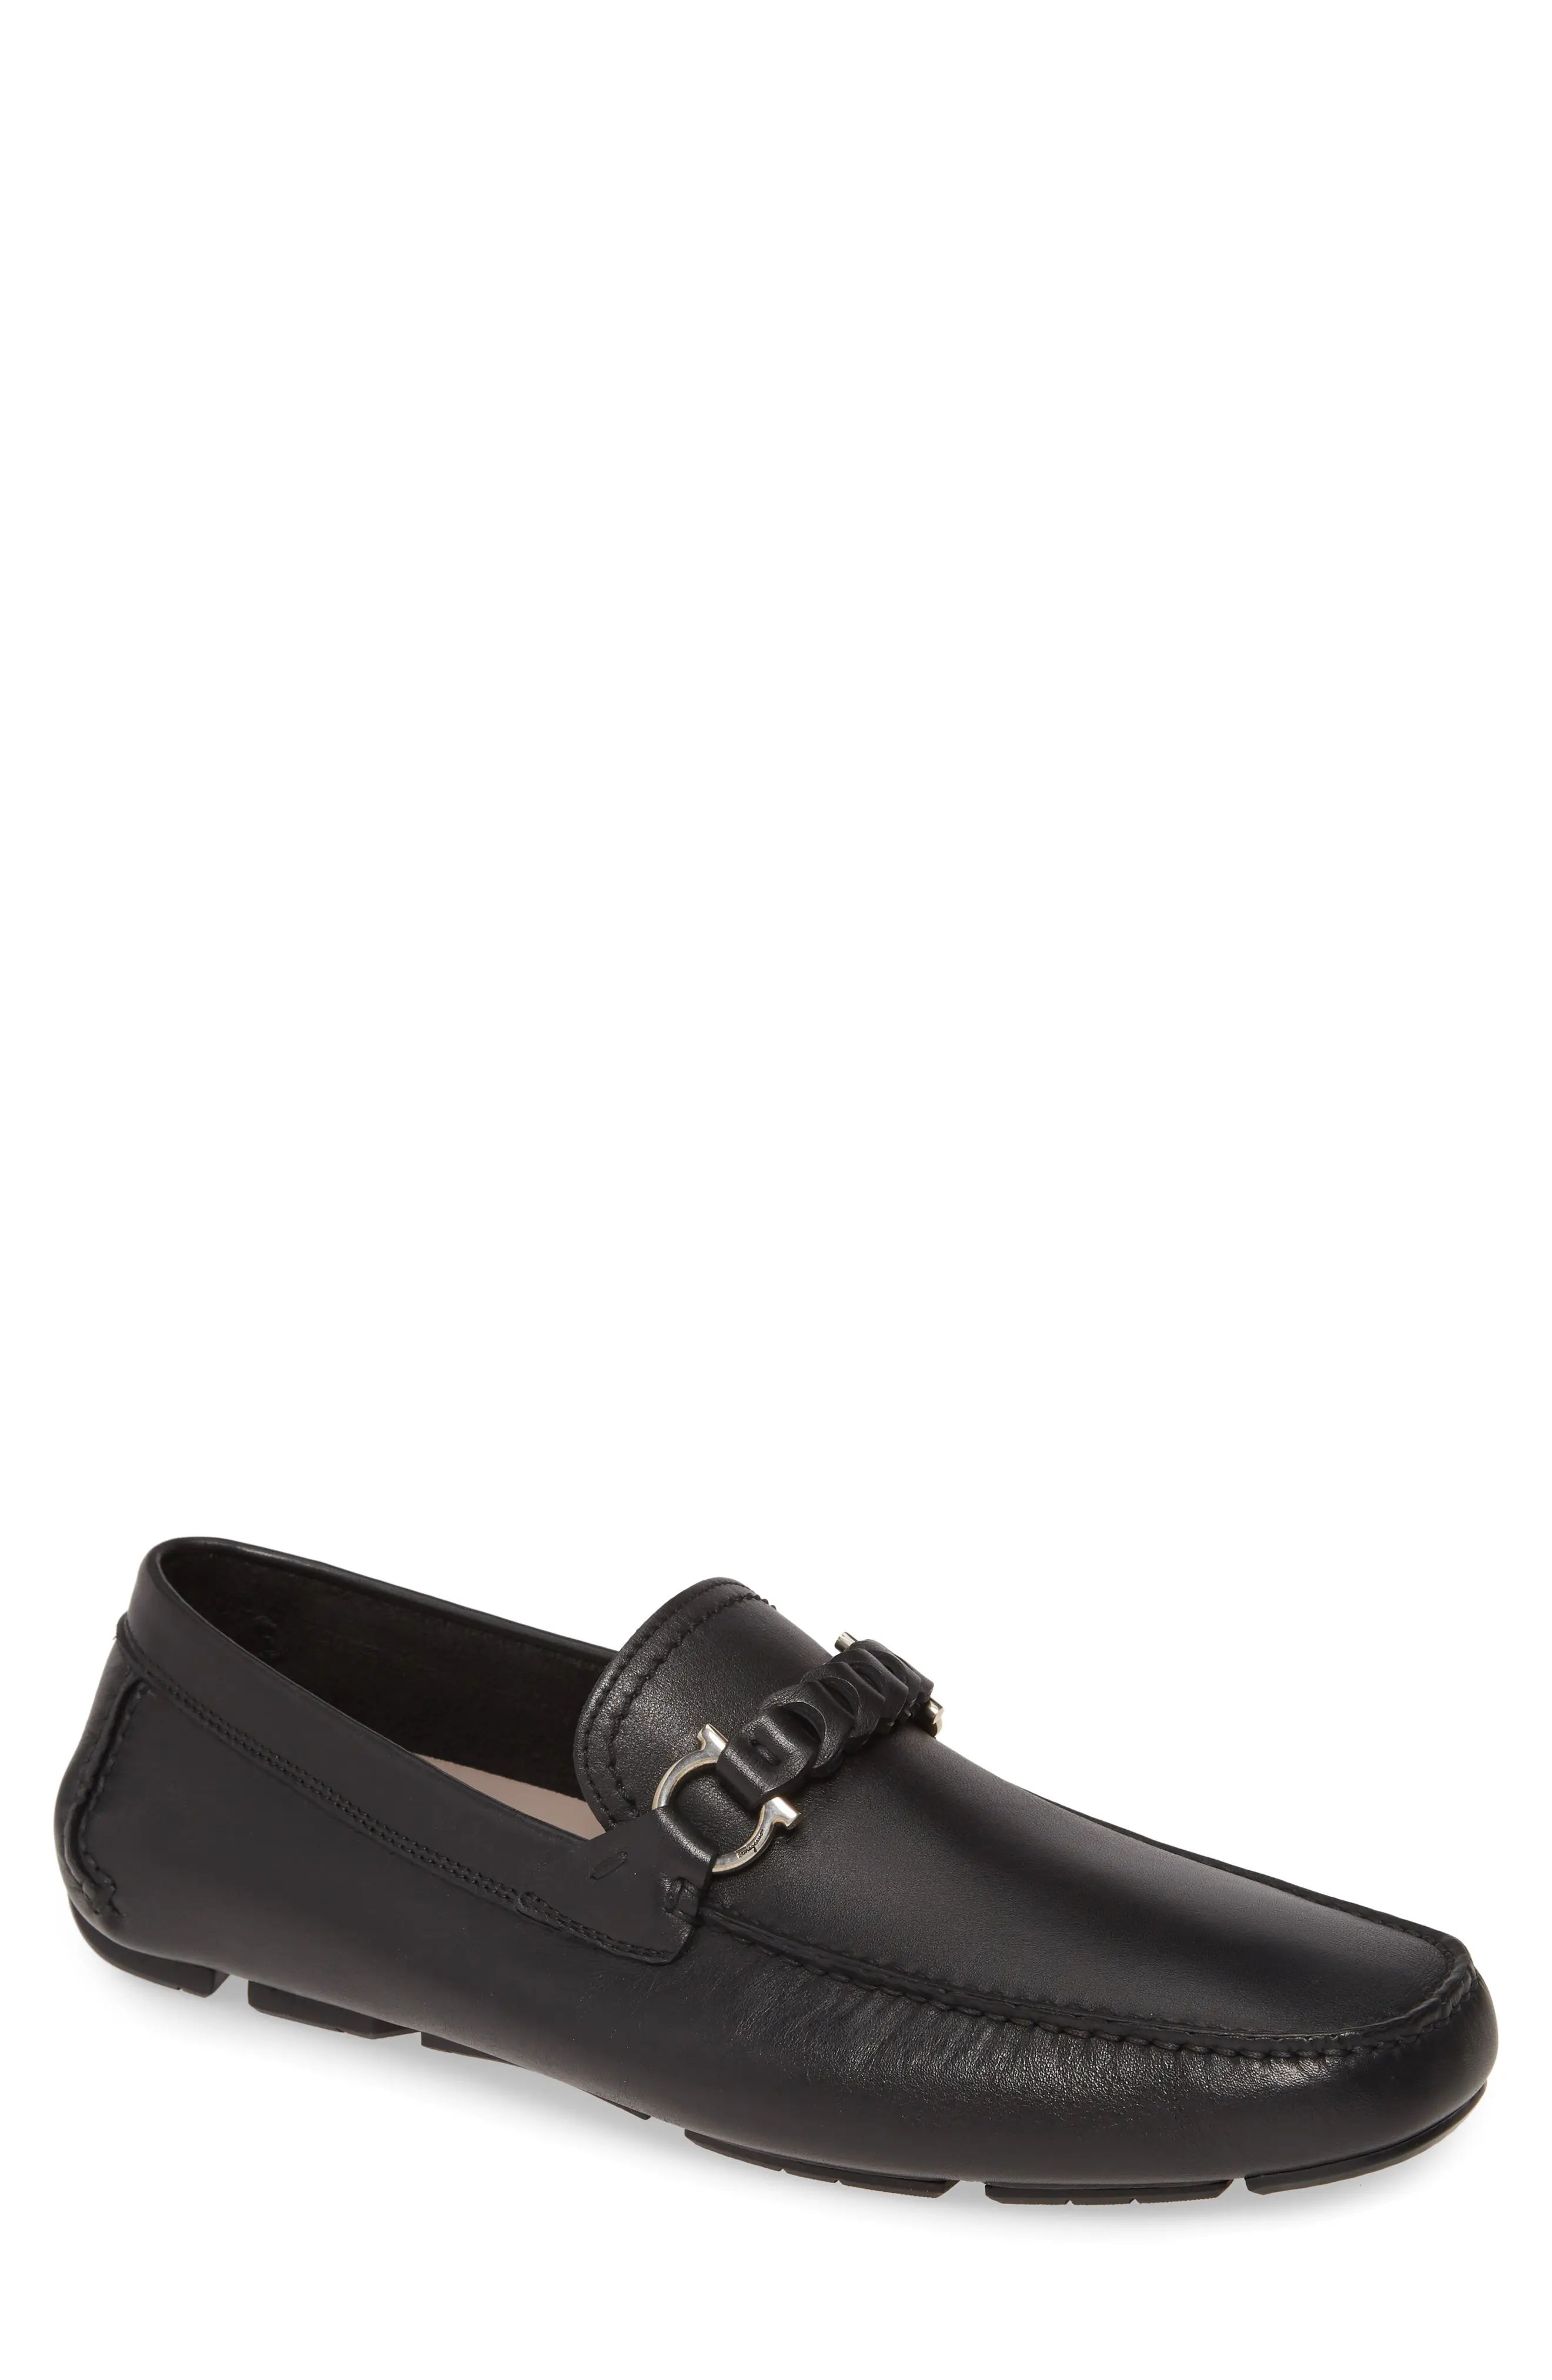 Men's Salvatore Ferragamo Stuart Driving Shoe, Size 8 W - Black | Nordstrom